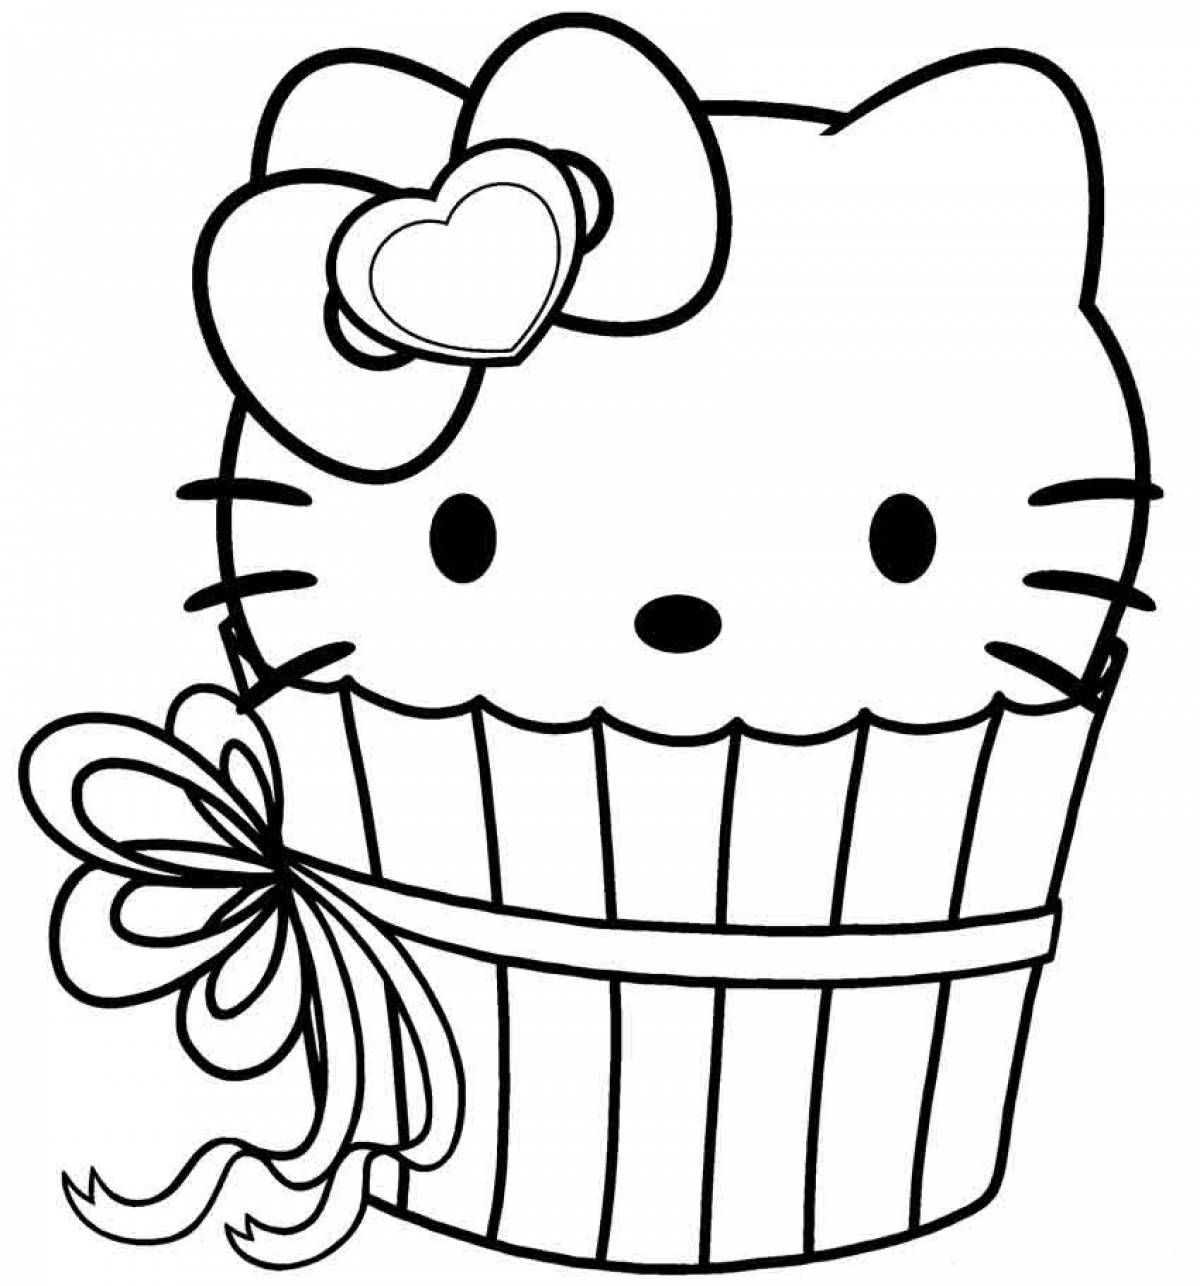 Cake kitty